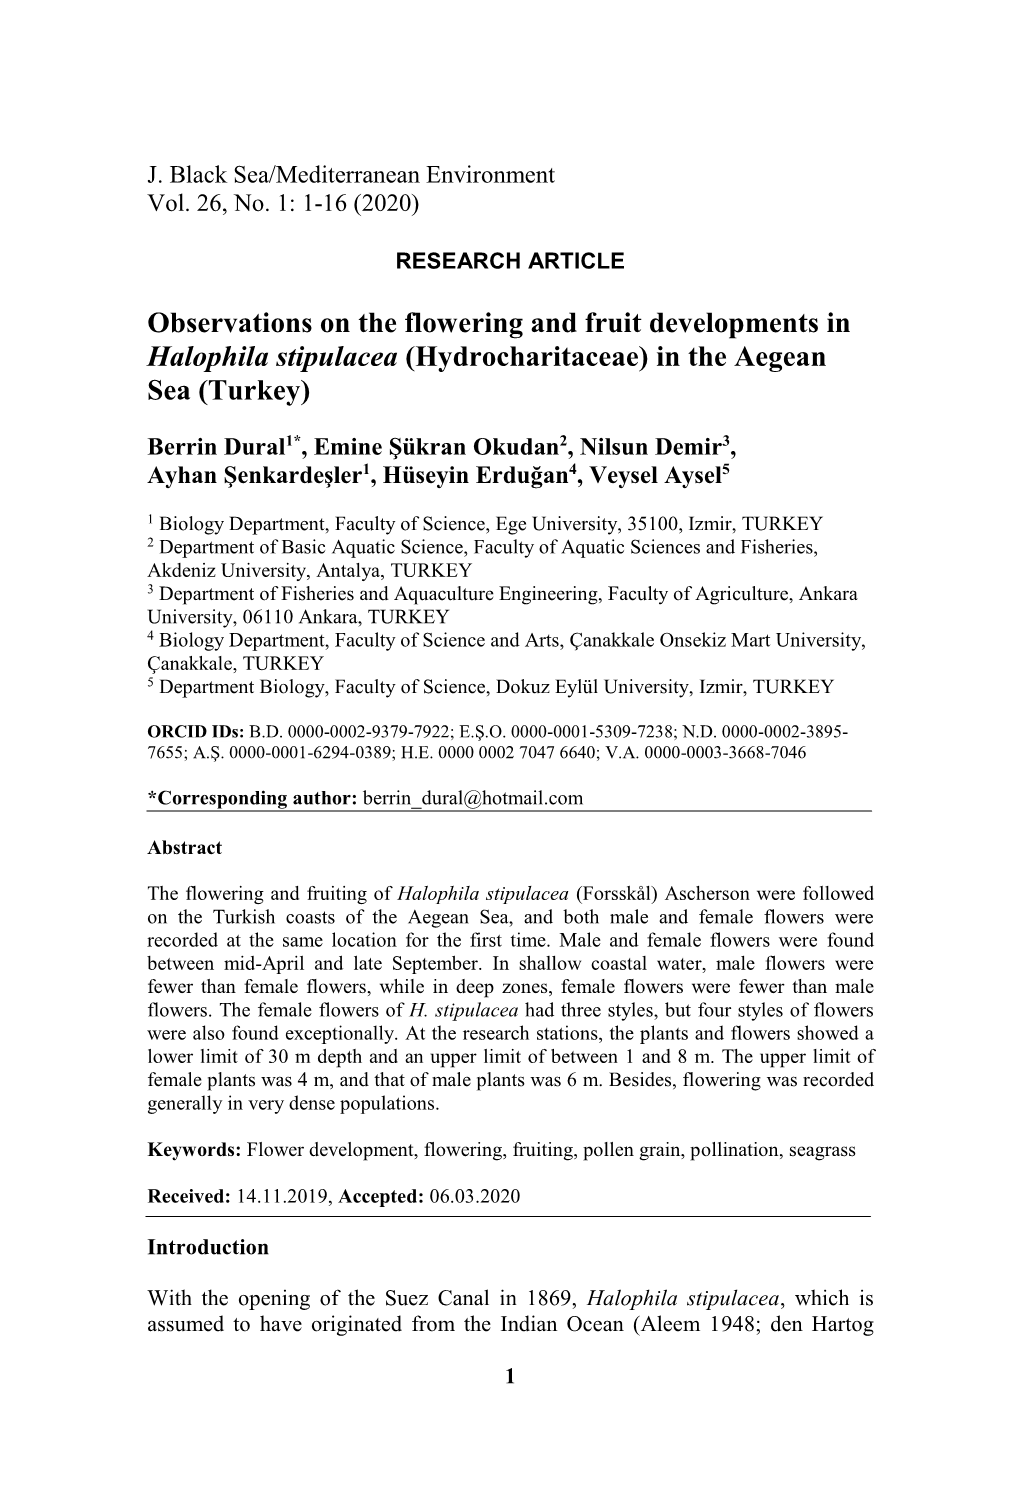 Observations on the Flowering and Fruit Developments in Halophila Stipulacea (Hydrocharitaceae) in the Aegean Sea (Turkey)